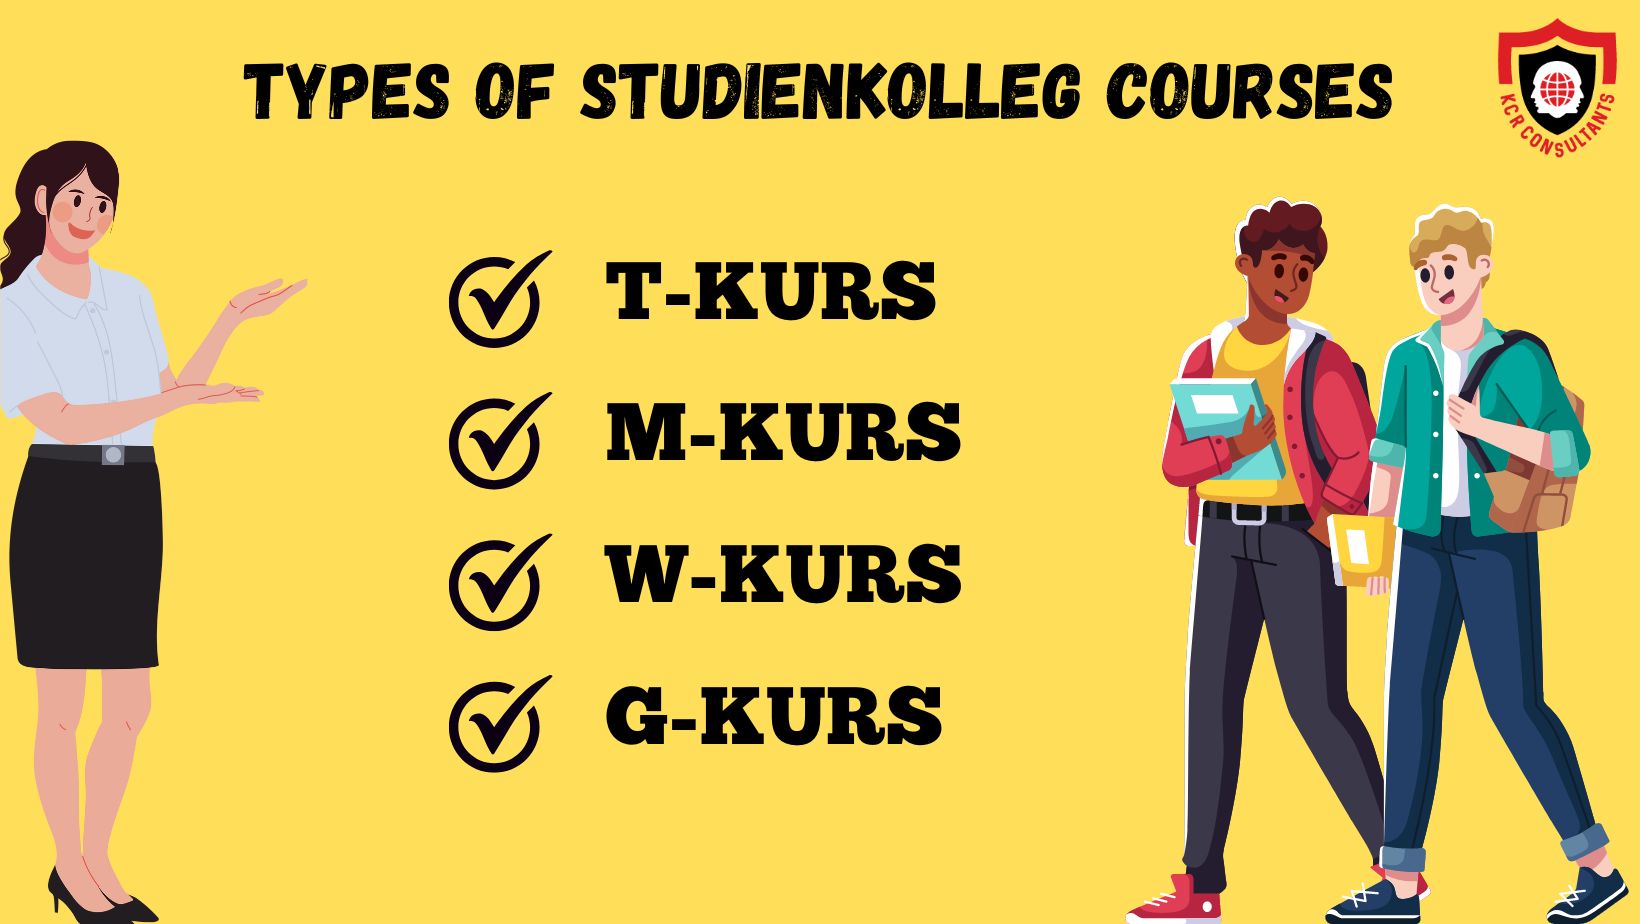 Studienkolleg in Germany - Types of Courses